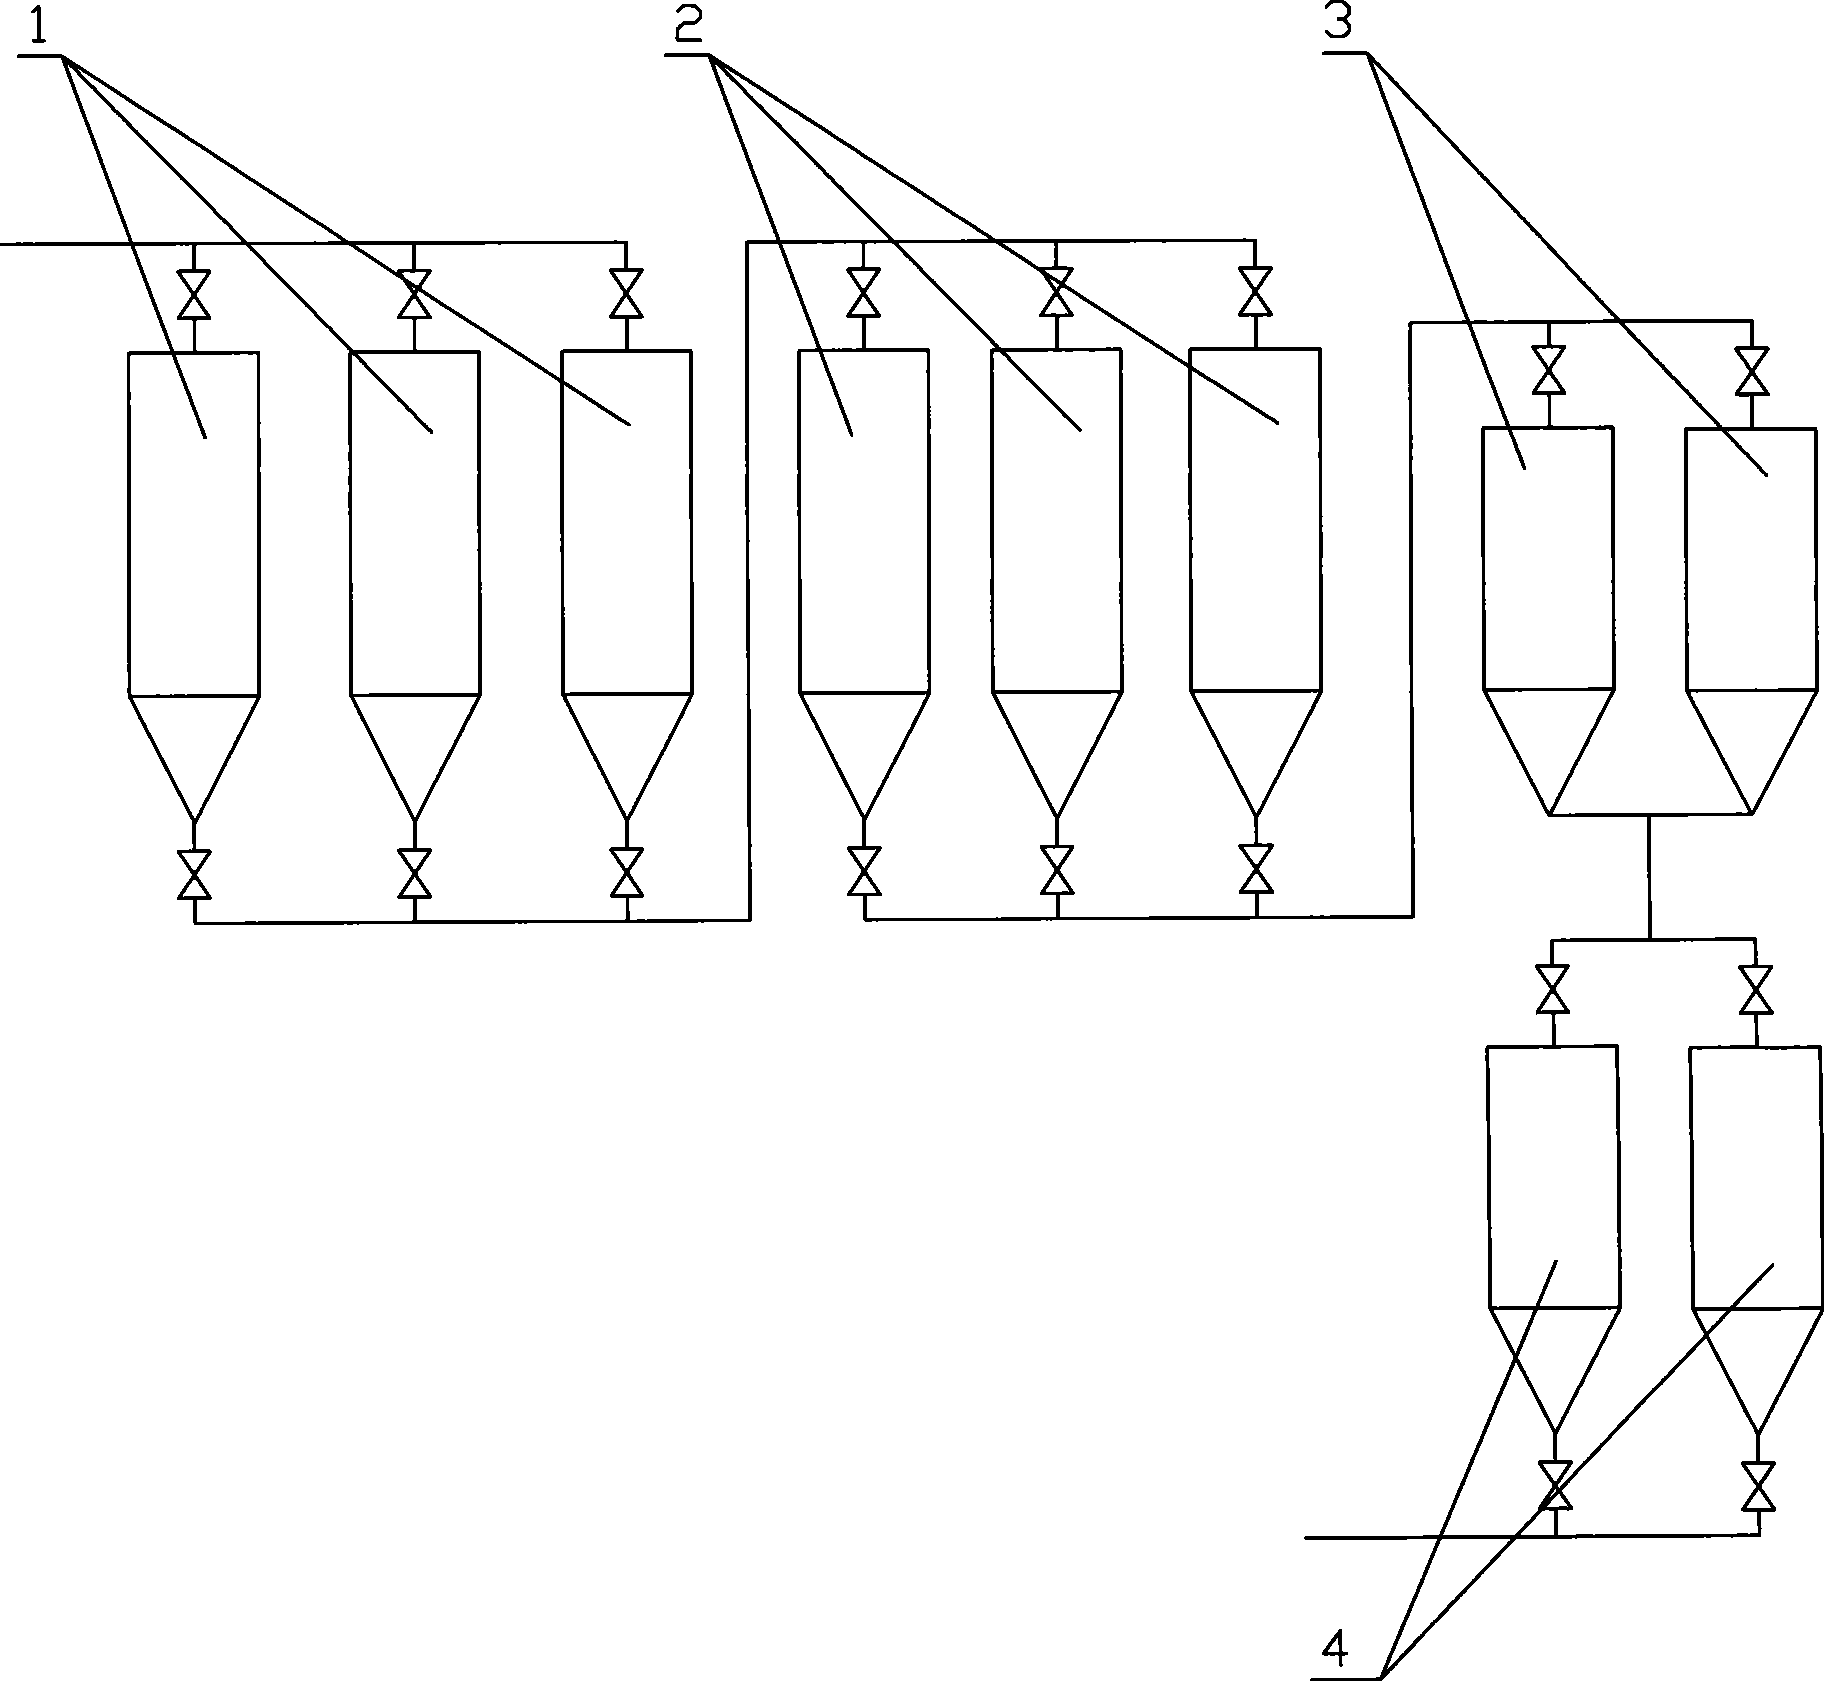 Refining technique method in malt amylin production process